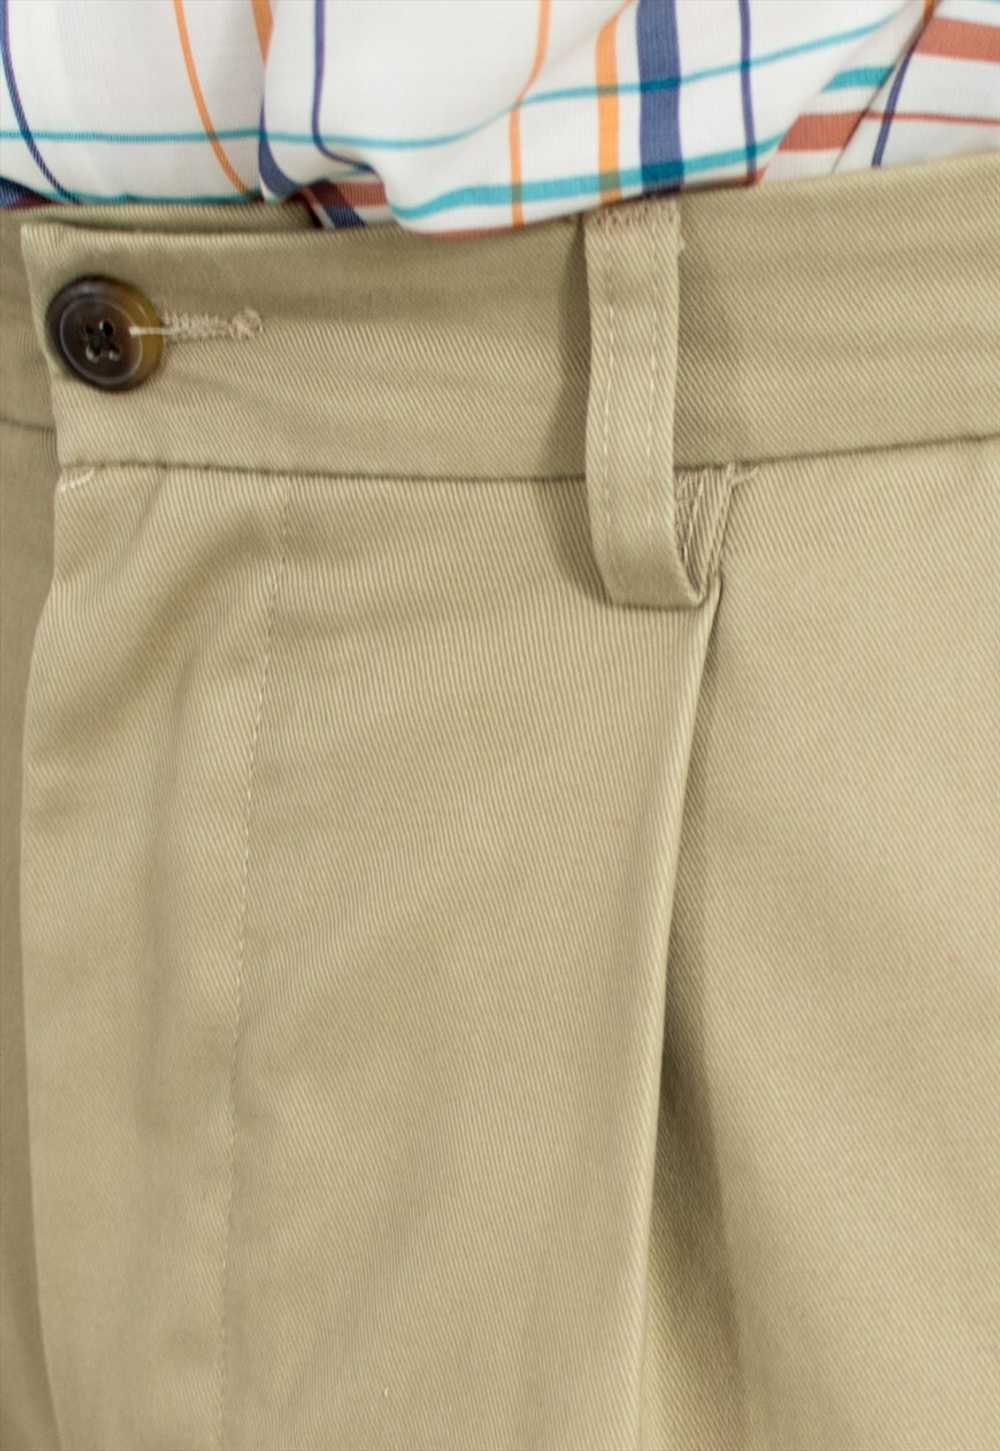 St. John's Bay Vintage pleated pants in beige siz… - image 2